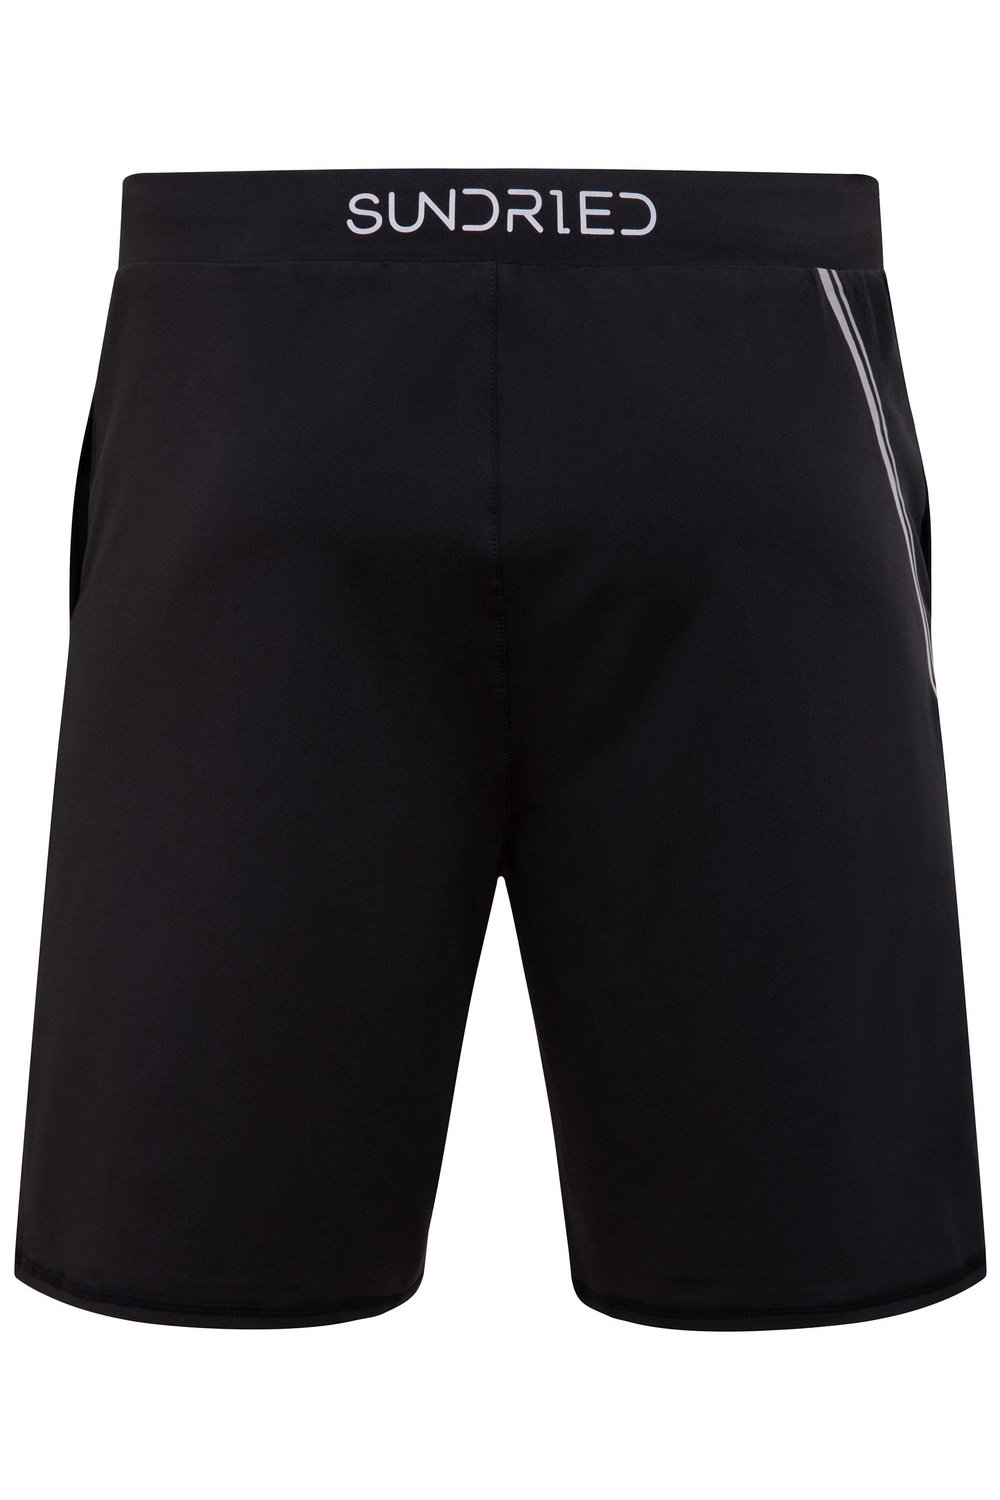 Sundried Strive Men's Workout Shorts Shorts Activewear